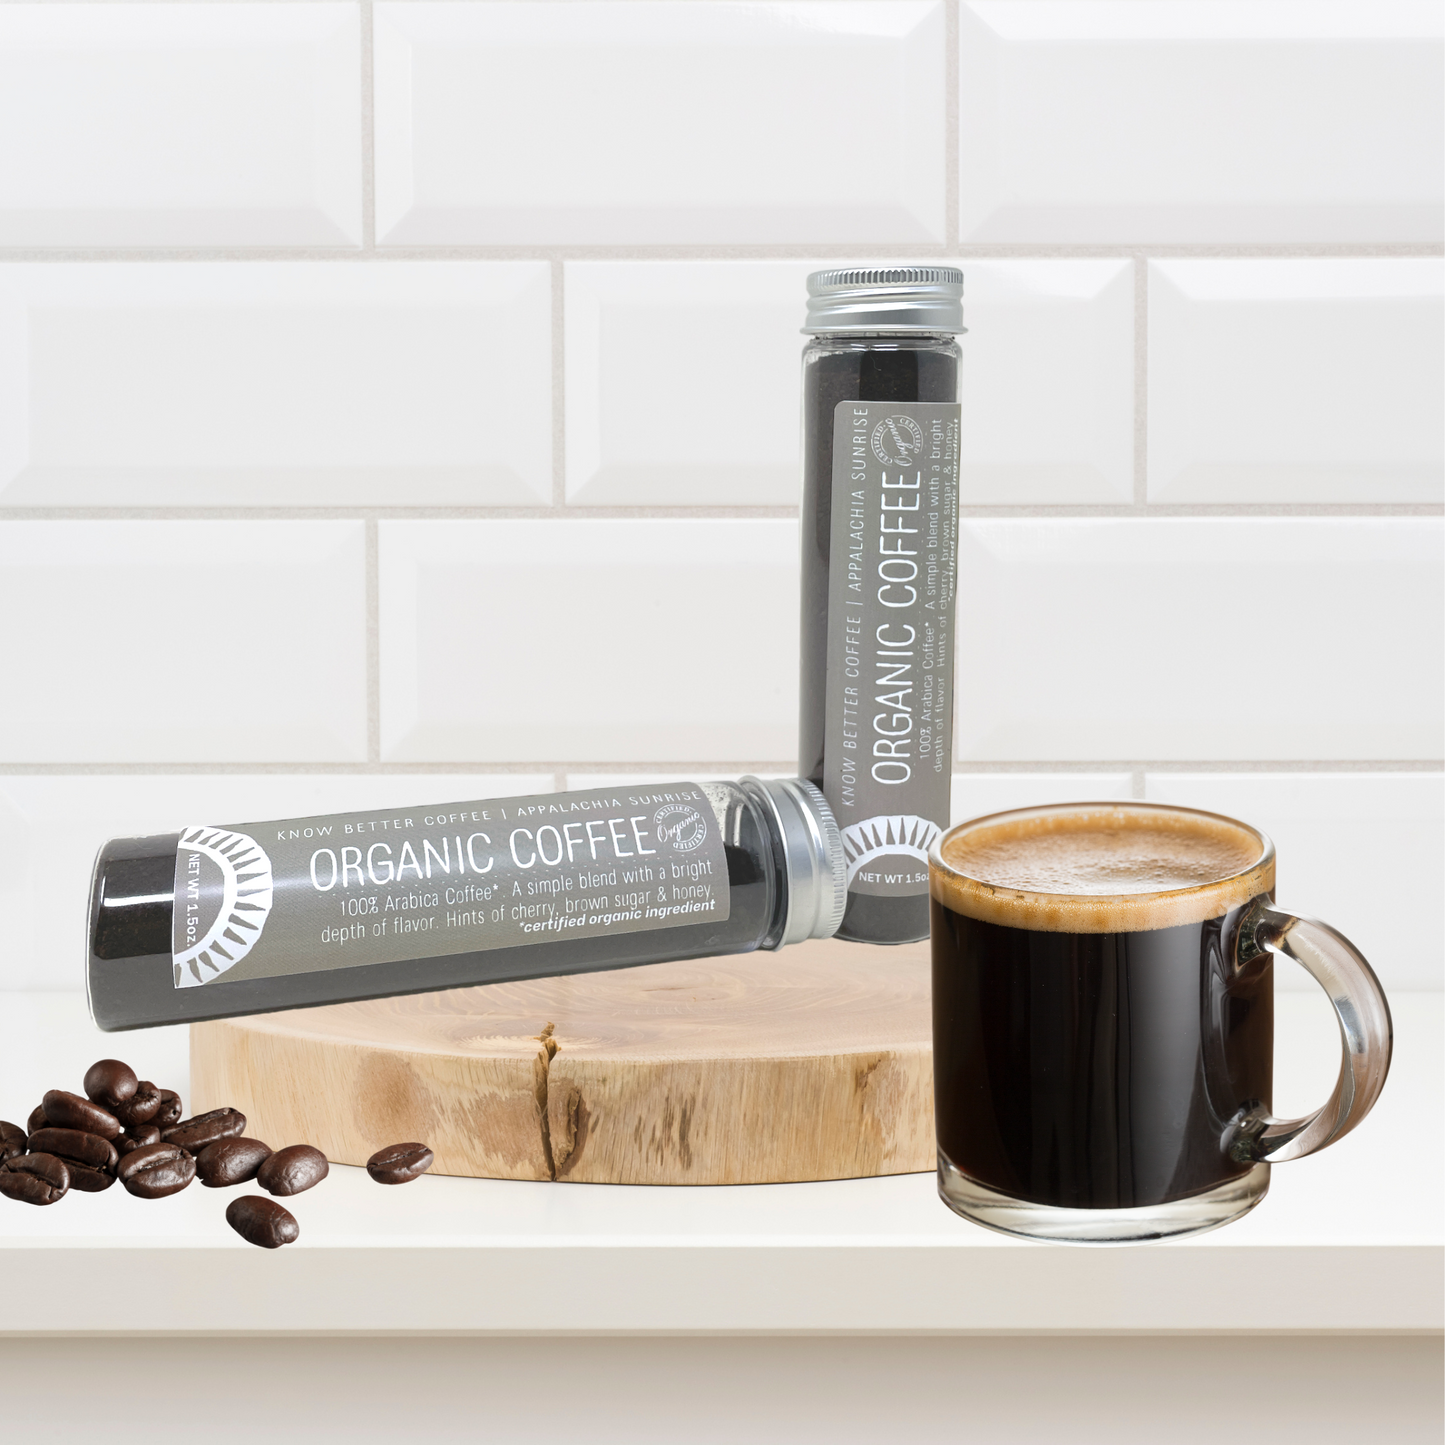 Appalachia Sunrise Organic Coffee Test Tube Favor (1.5oz)